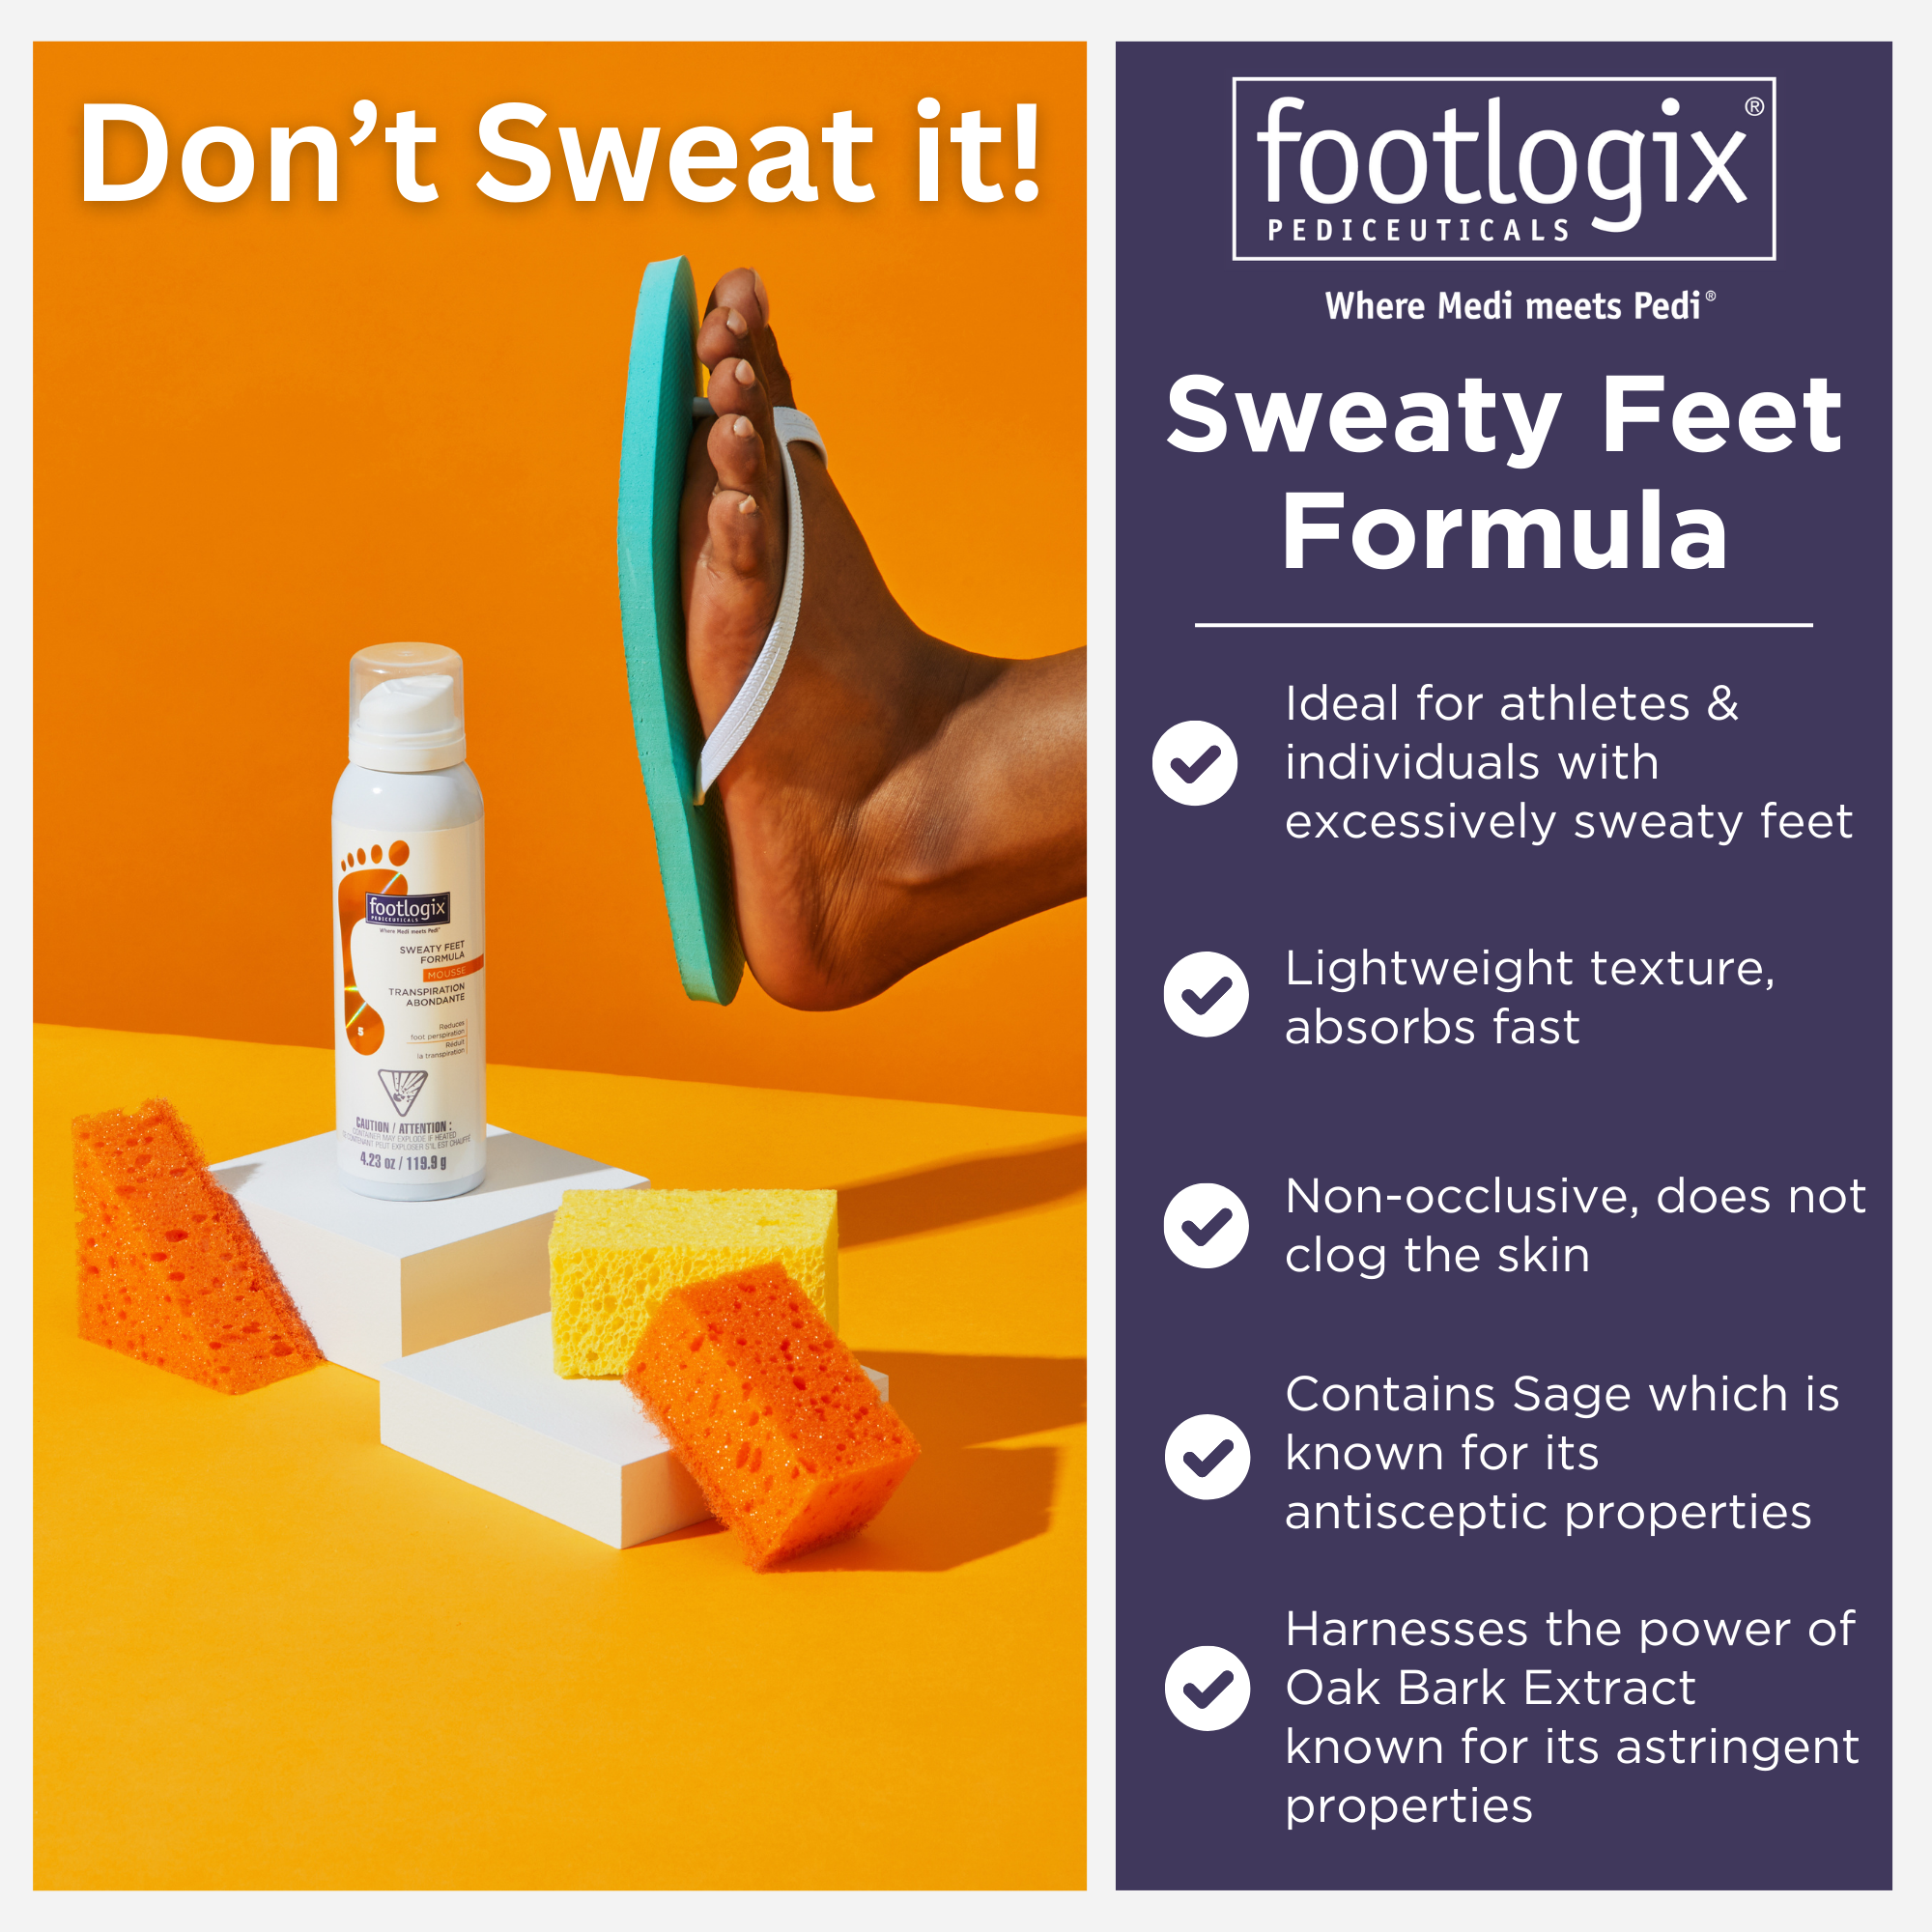 Footlogix Sweaty Feet Formula